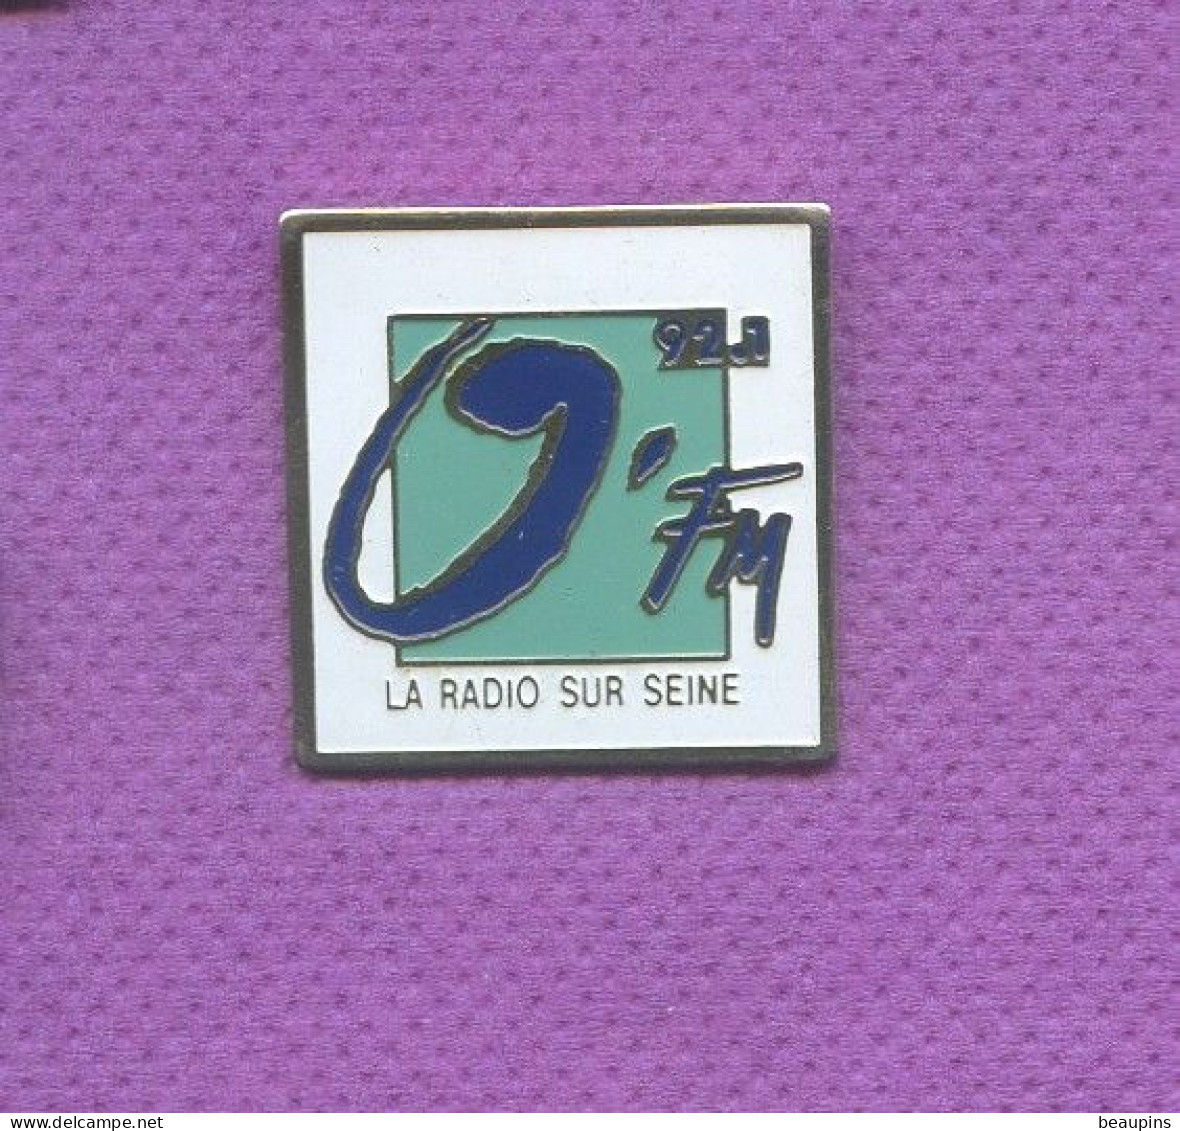 Rare Pins Media O Fm La Radio Sur Seine L148 - Mass Media